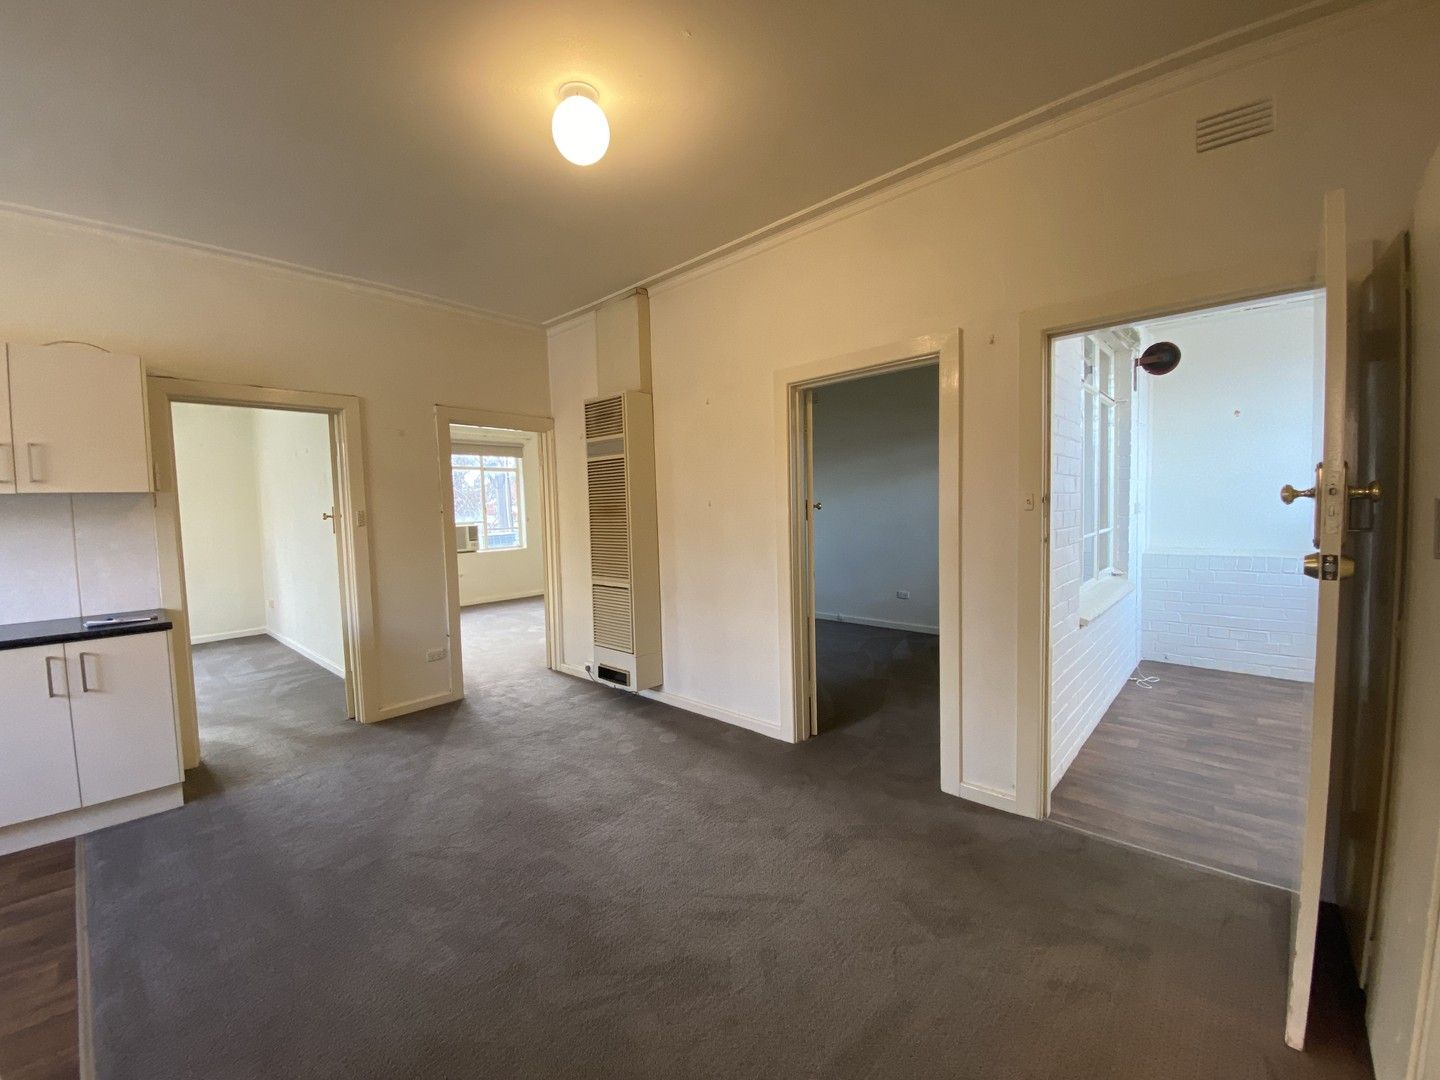 2 bedrooms Apartment / Unit / Flat in 1/488 David Street ALBURY NSW, 2640